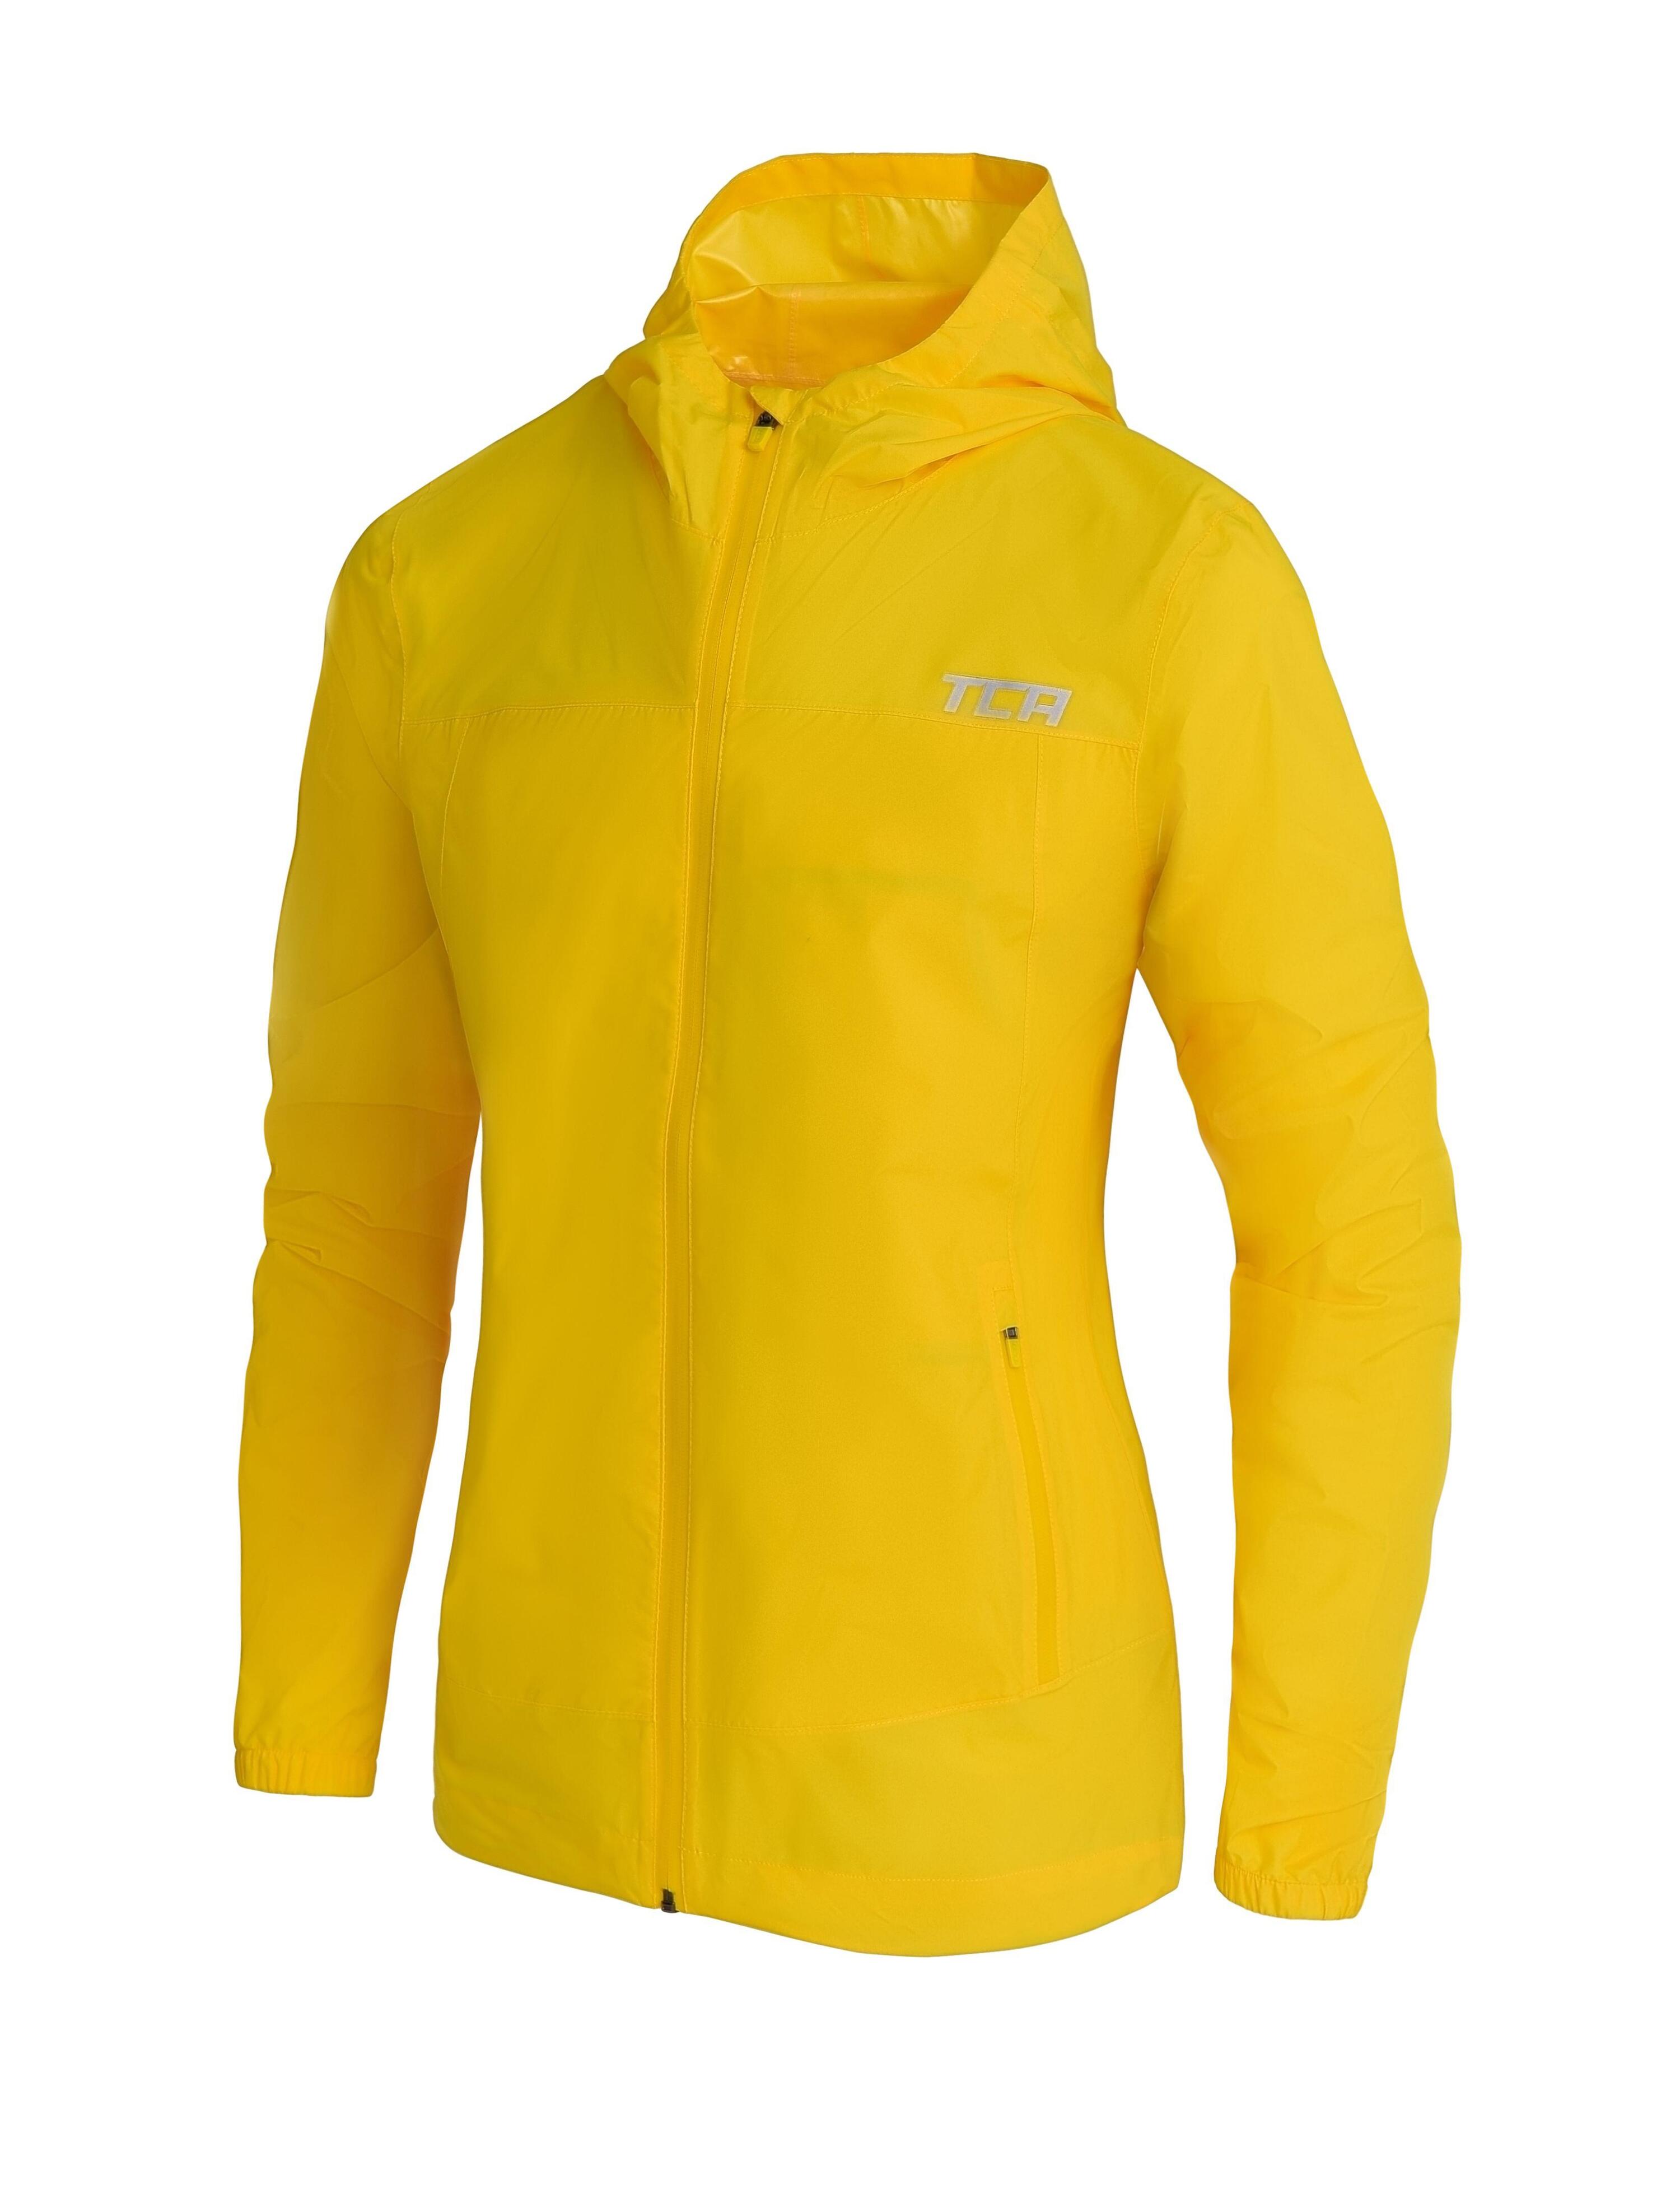 TCA Men's AirLite Rain Jacket with Zip Pockets - Vibrant Yellow